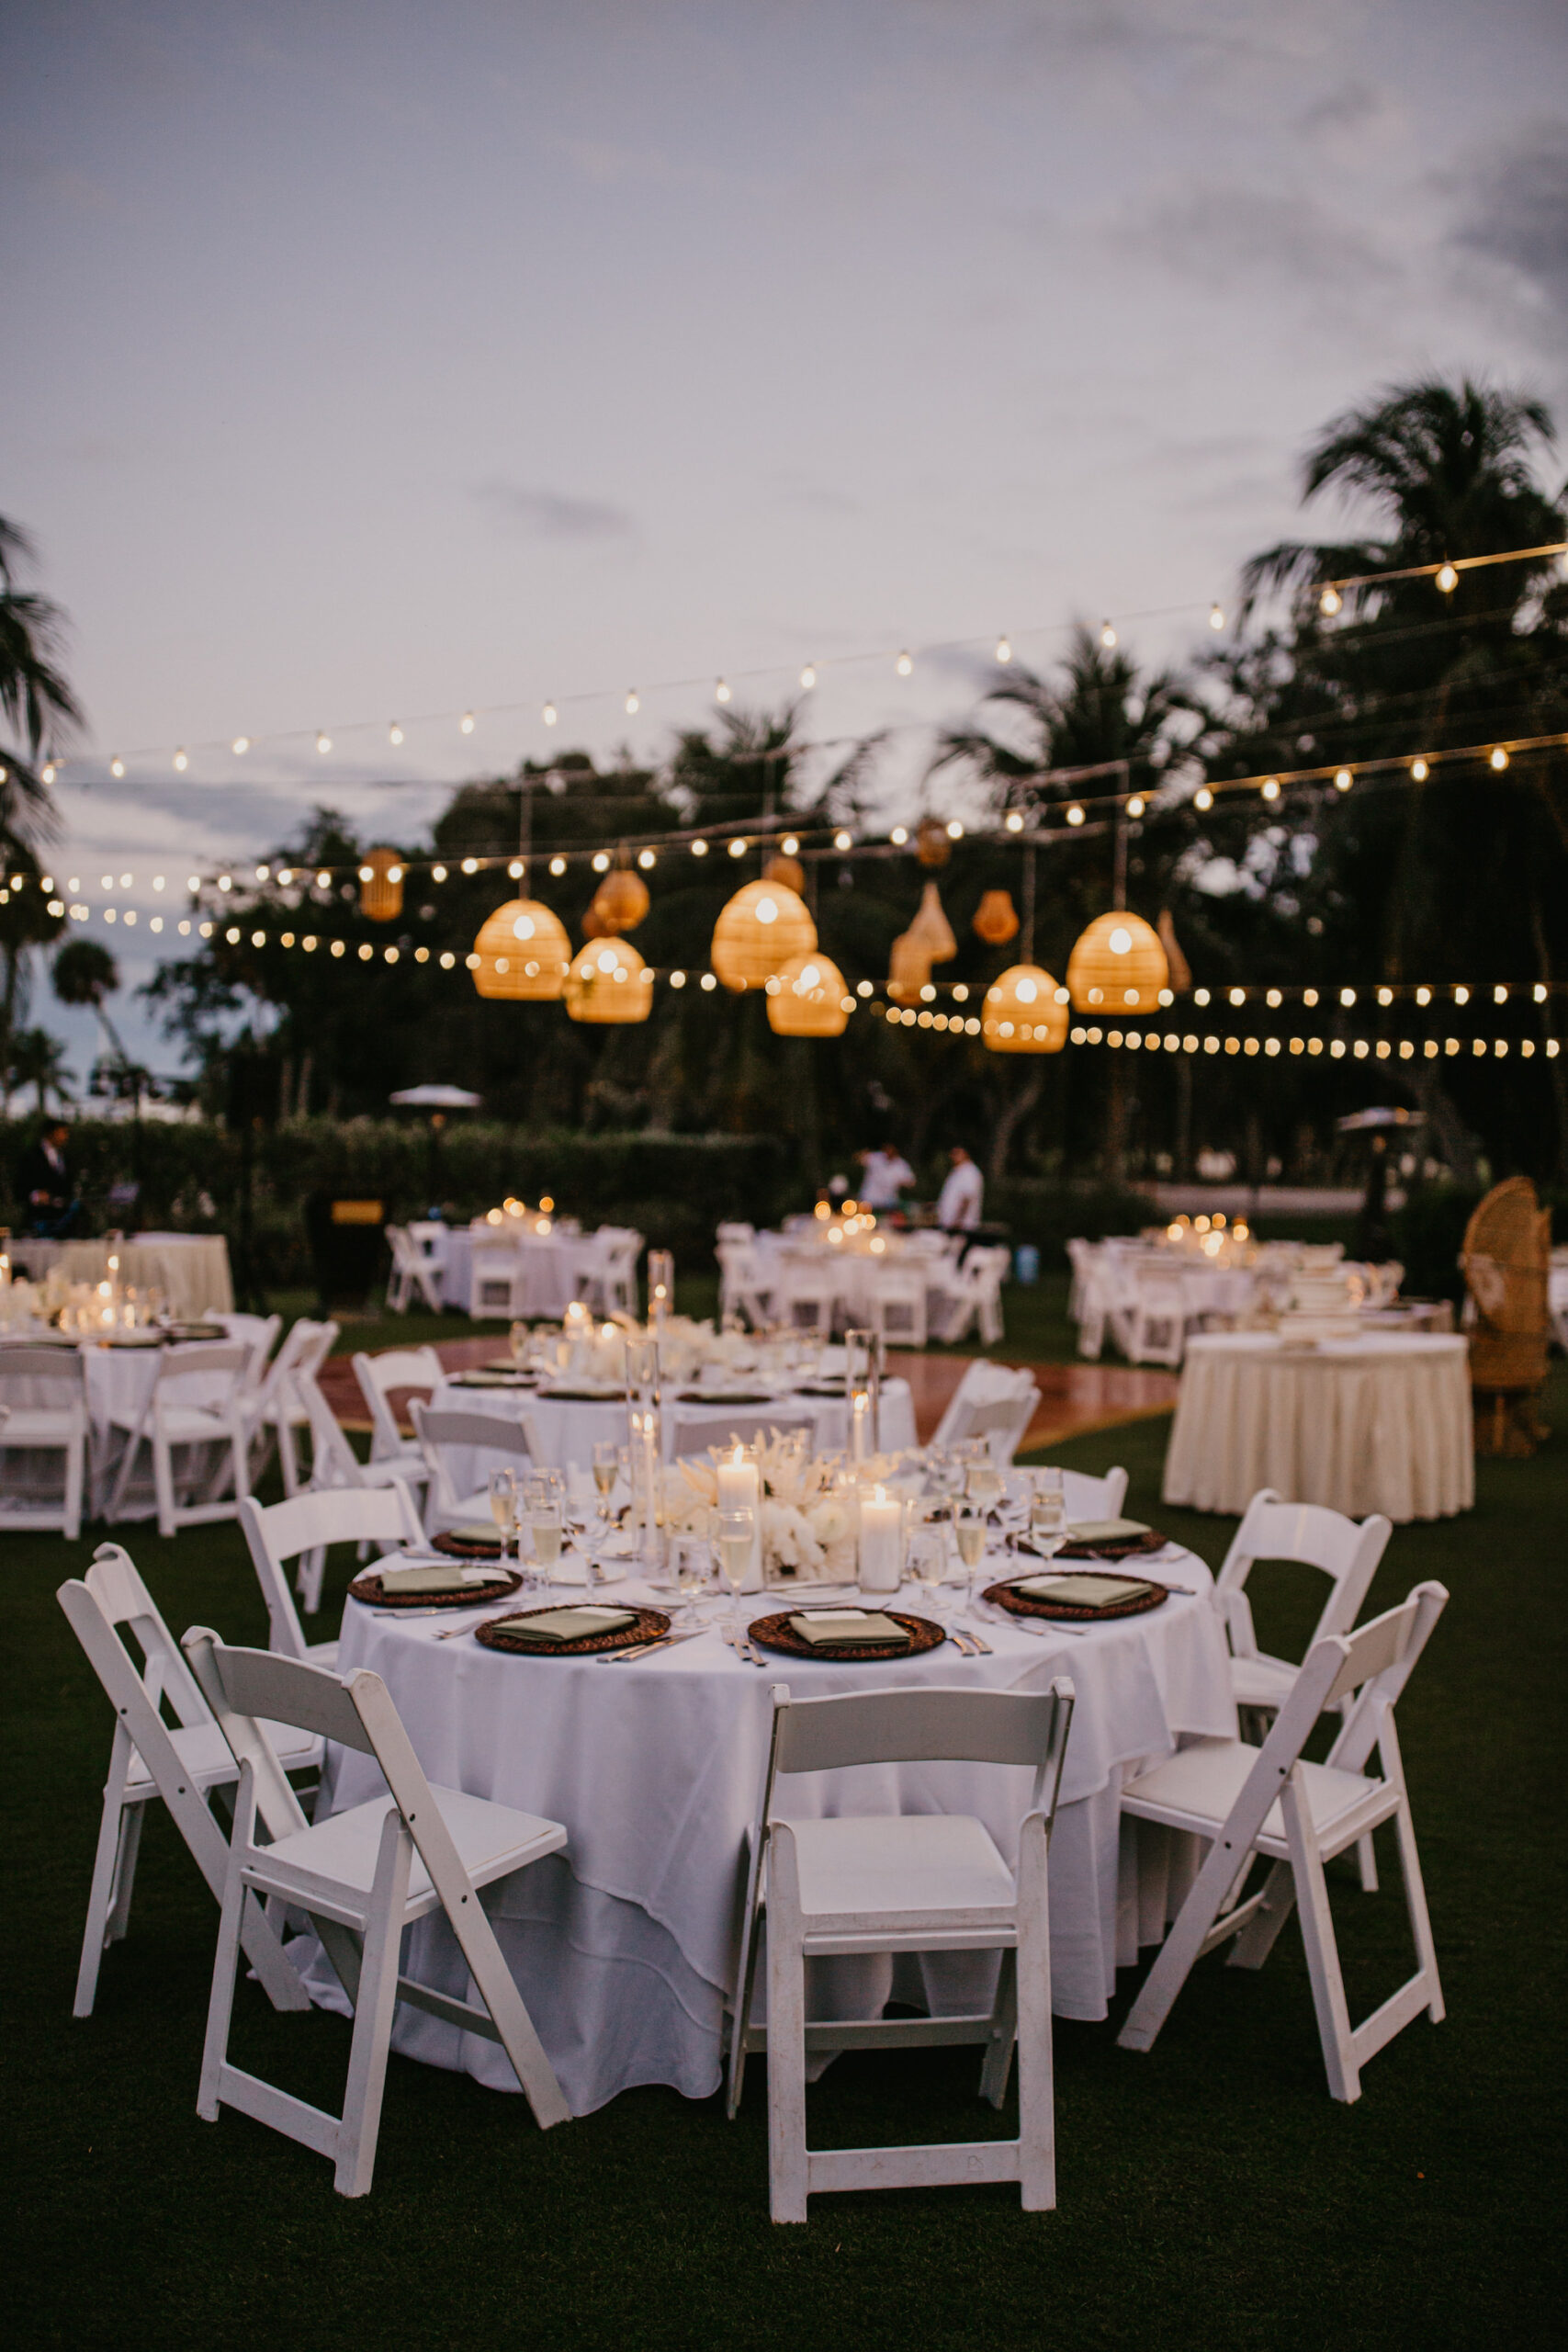 Island House Outdoor Wedding Reception with String Lights | Sarasota Venue Longboat Key Club